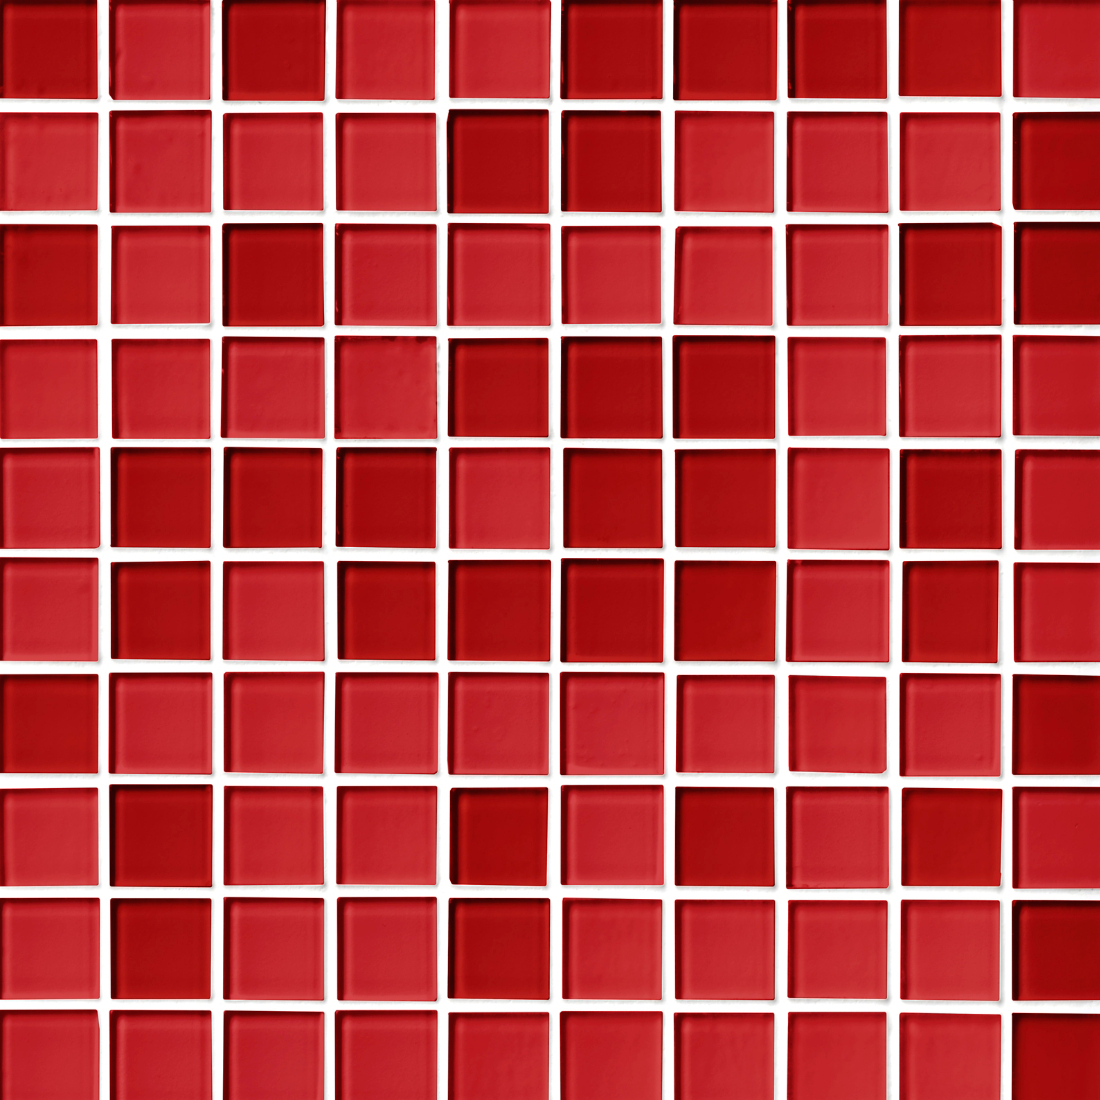 Men Entreprenør Syndicate Glass Red Blend Mosaic Wall and Floor Tile - 1 in. - The Tile Shop